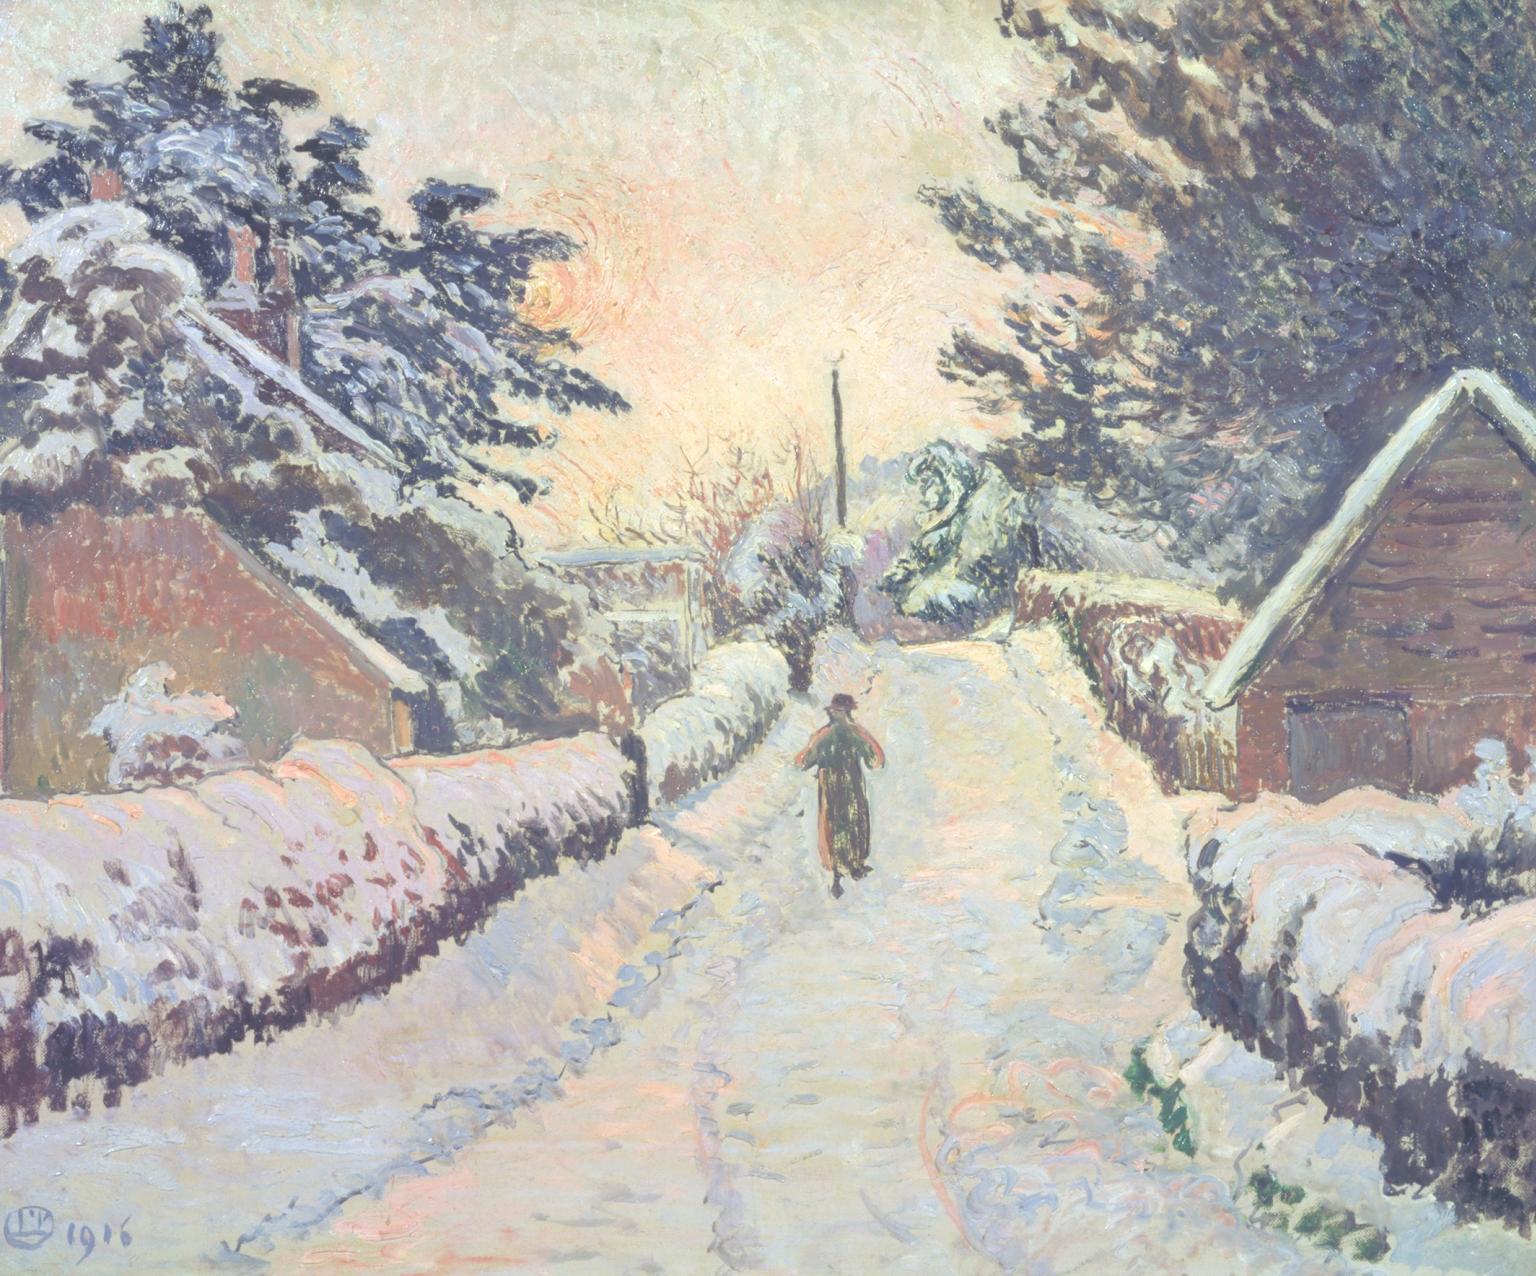 Ајви Котиџ, Колдхарбор: Сунце и снег by Lucien Pissarro - 1916. - 53 × 64,4 cm 